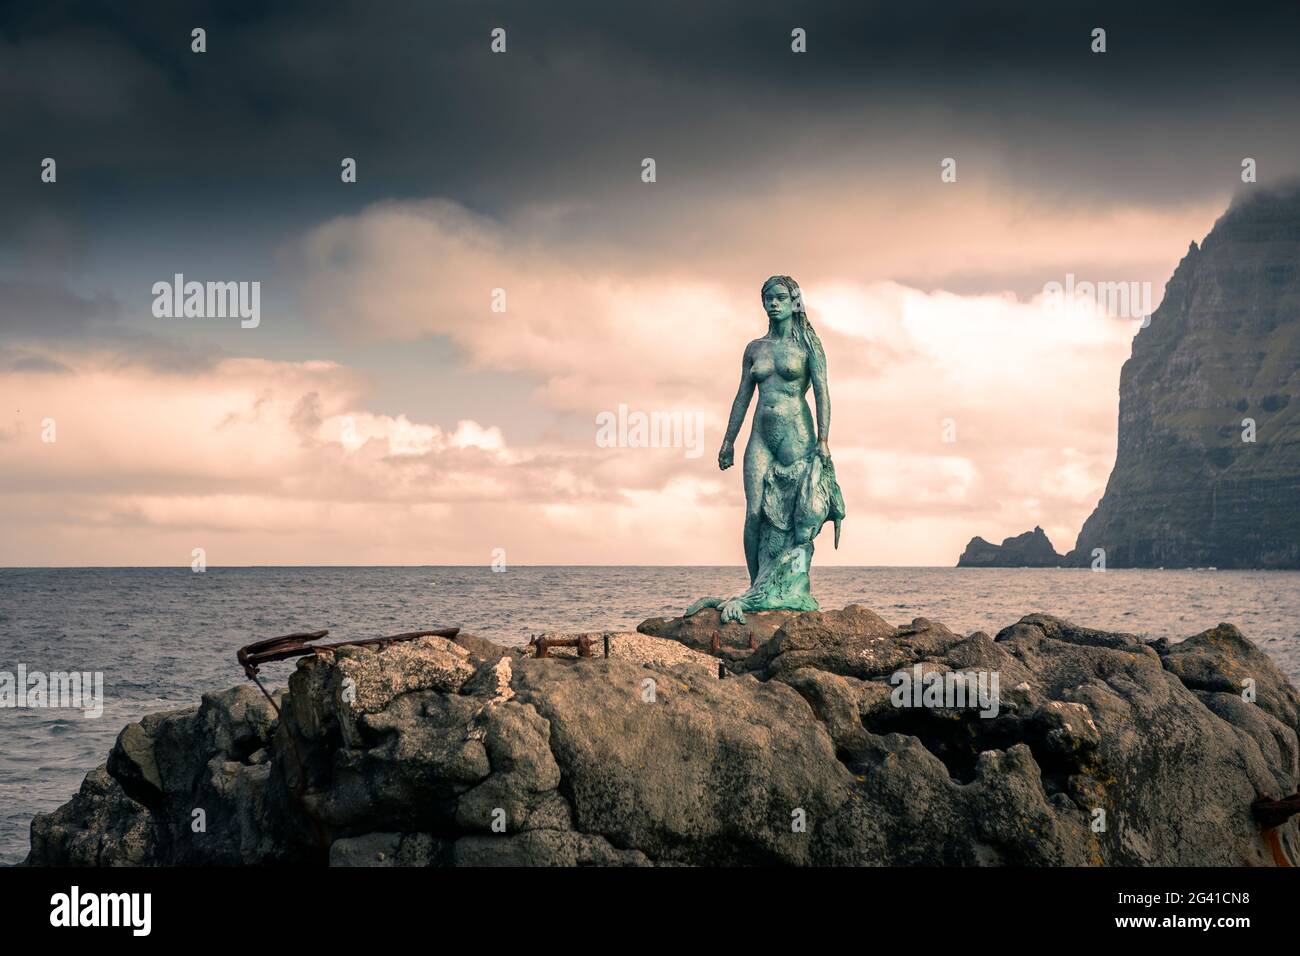 Statue of Kópakonan, mermaid in the village of Mikladalur on the island of Kalsoy, Faroe Islands Stock Photo